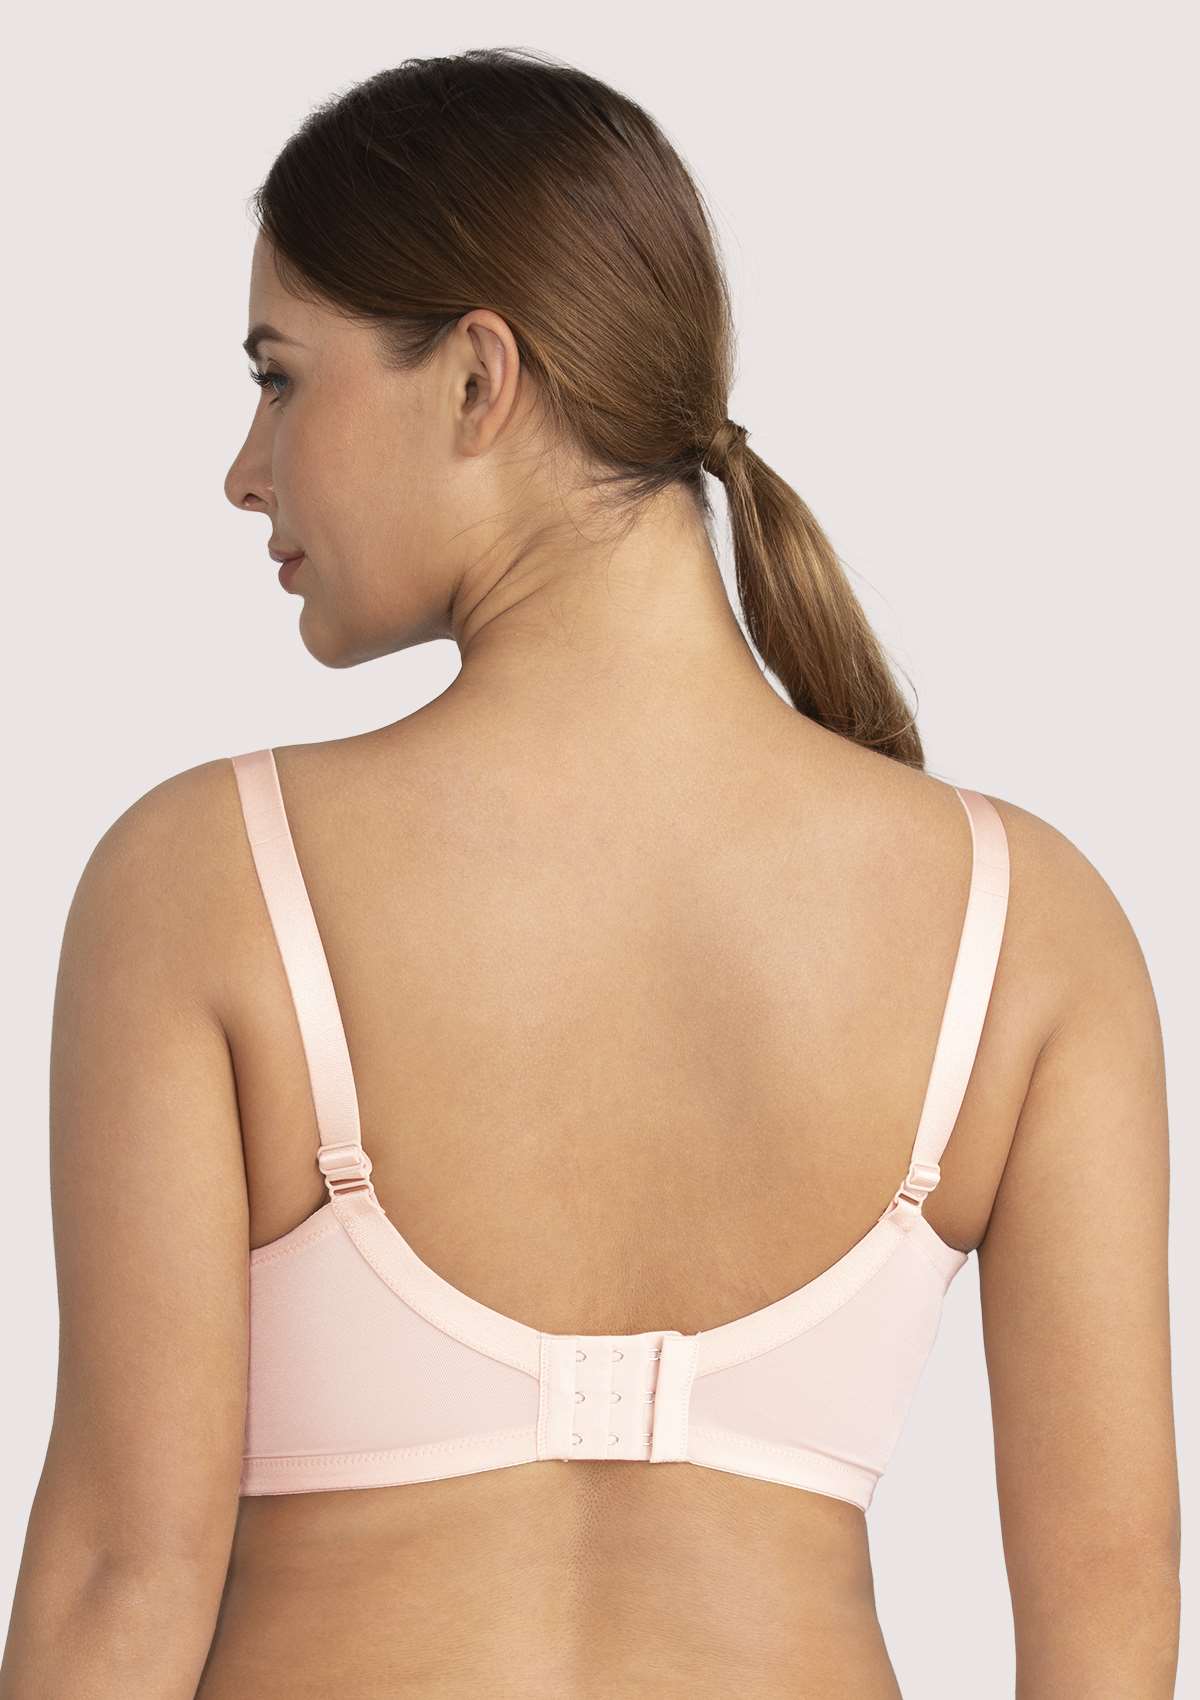 HSIA Sunflower Matching Bra And Panties Set: Comfortable Plus Size Bra - Pink / 40 / C